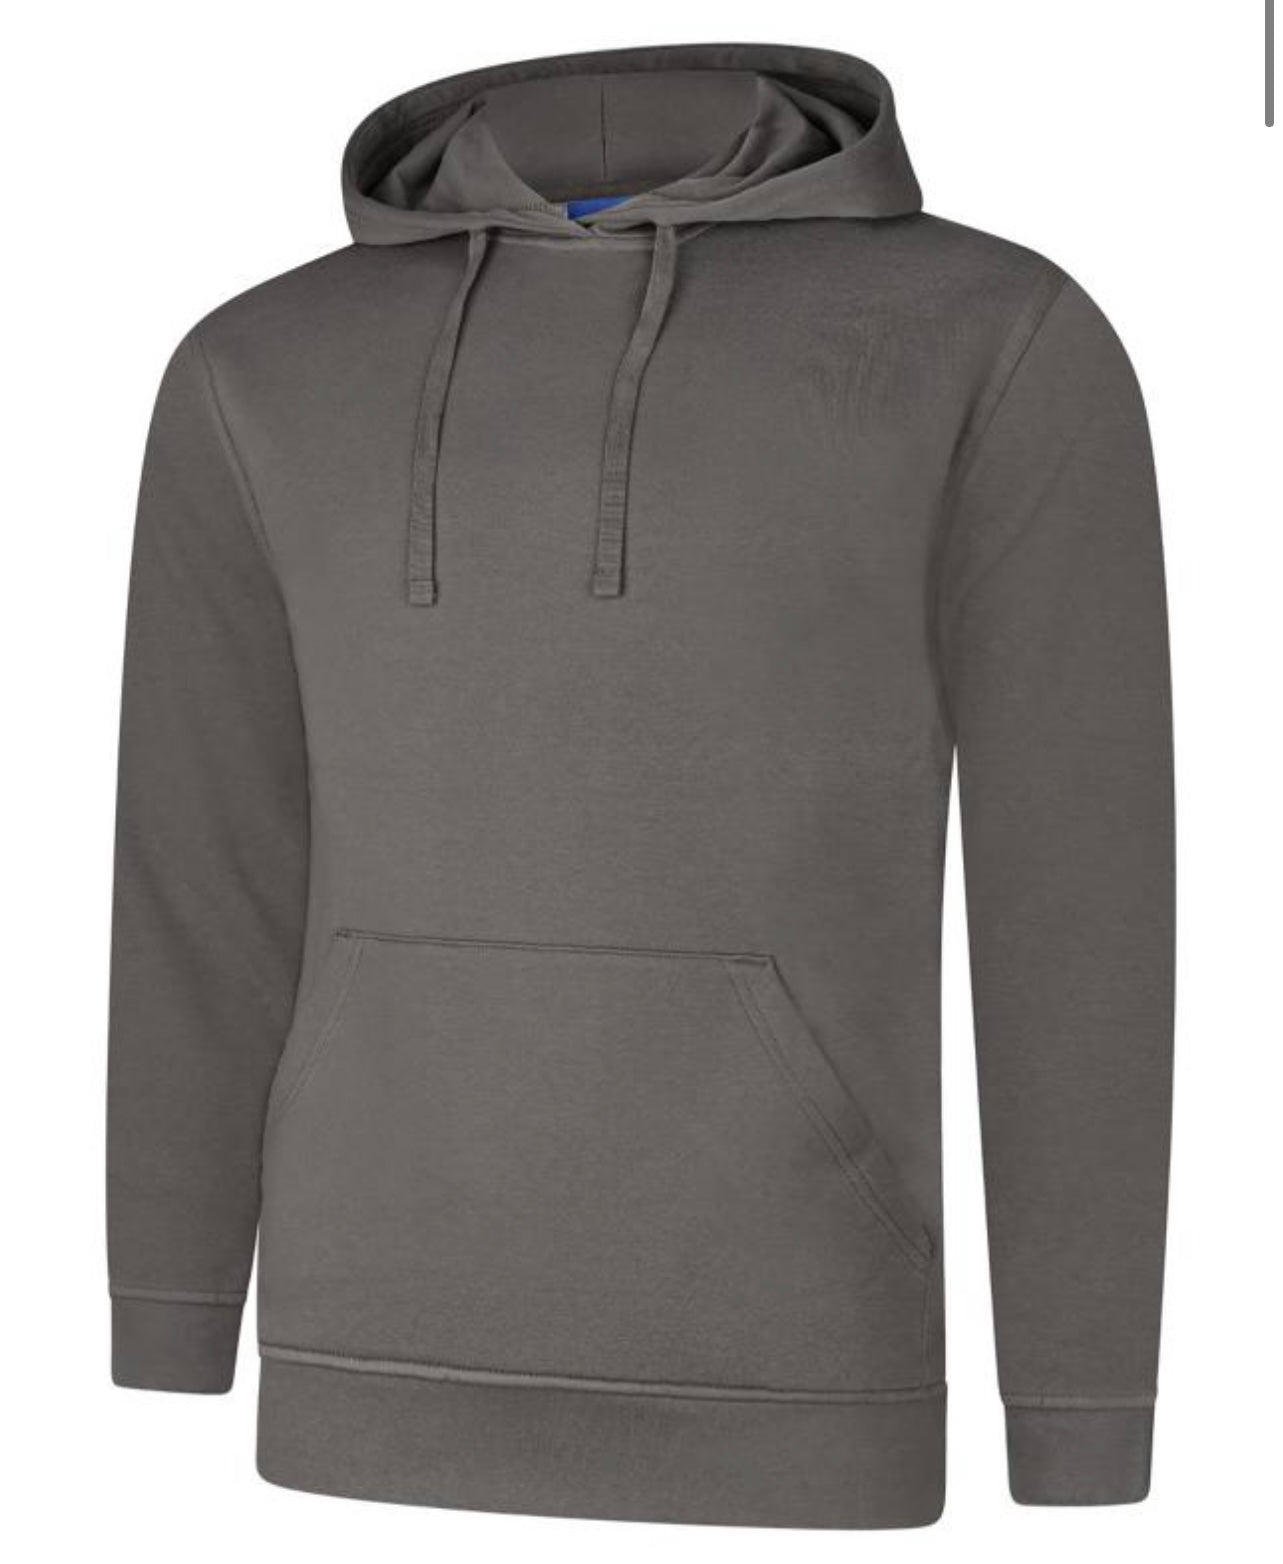 Steel grey hoodie oversized